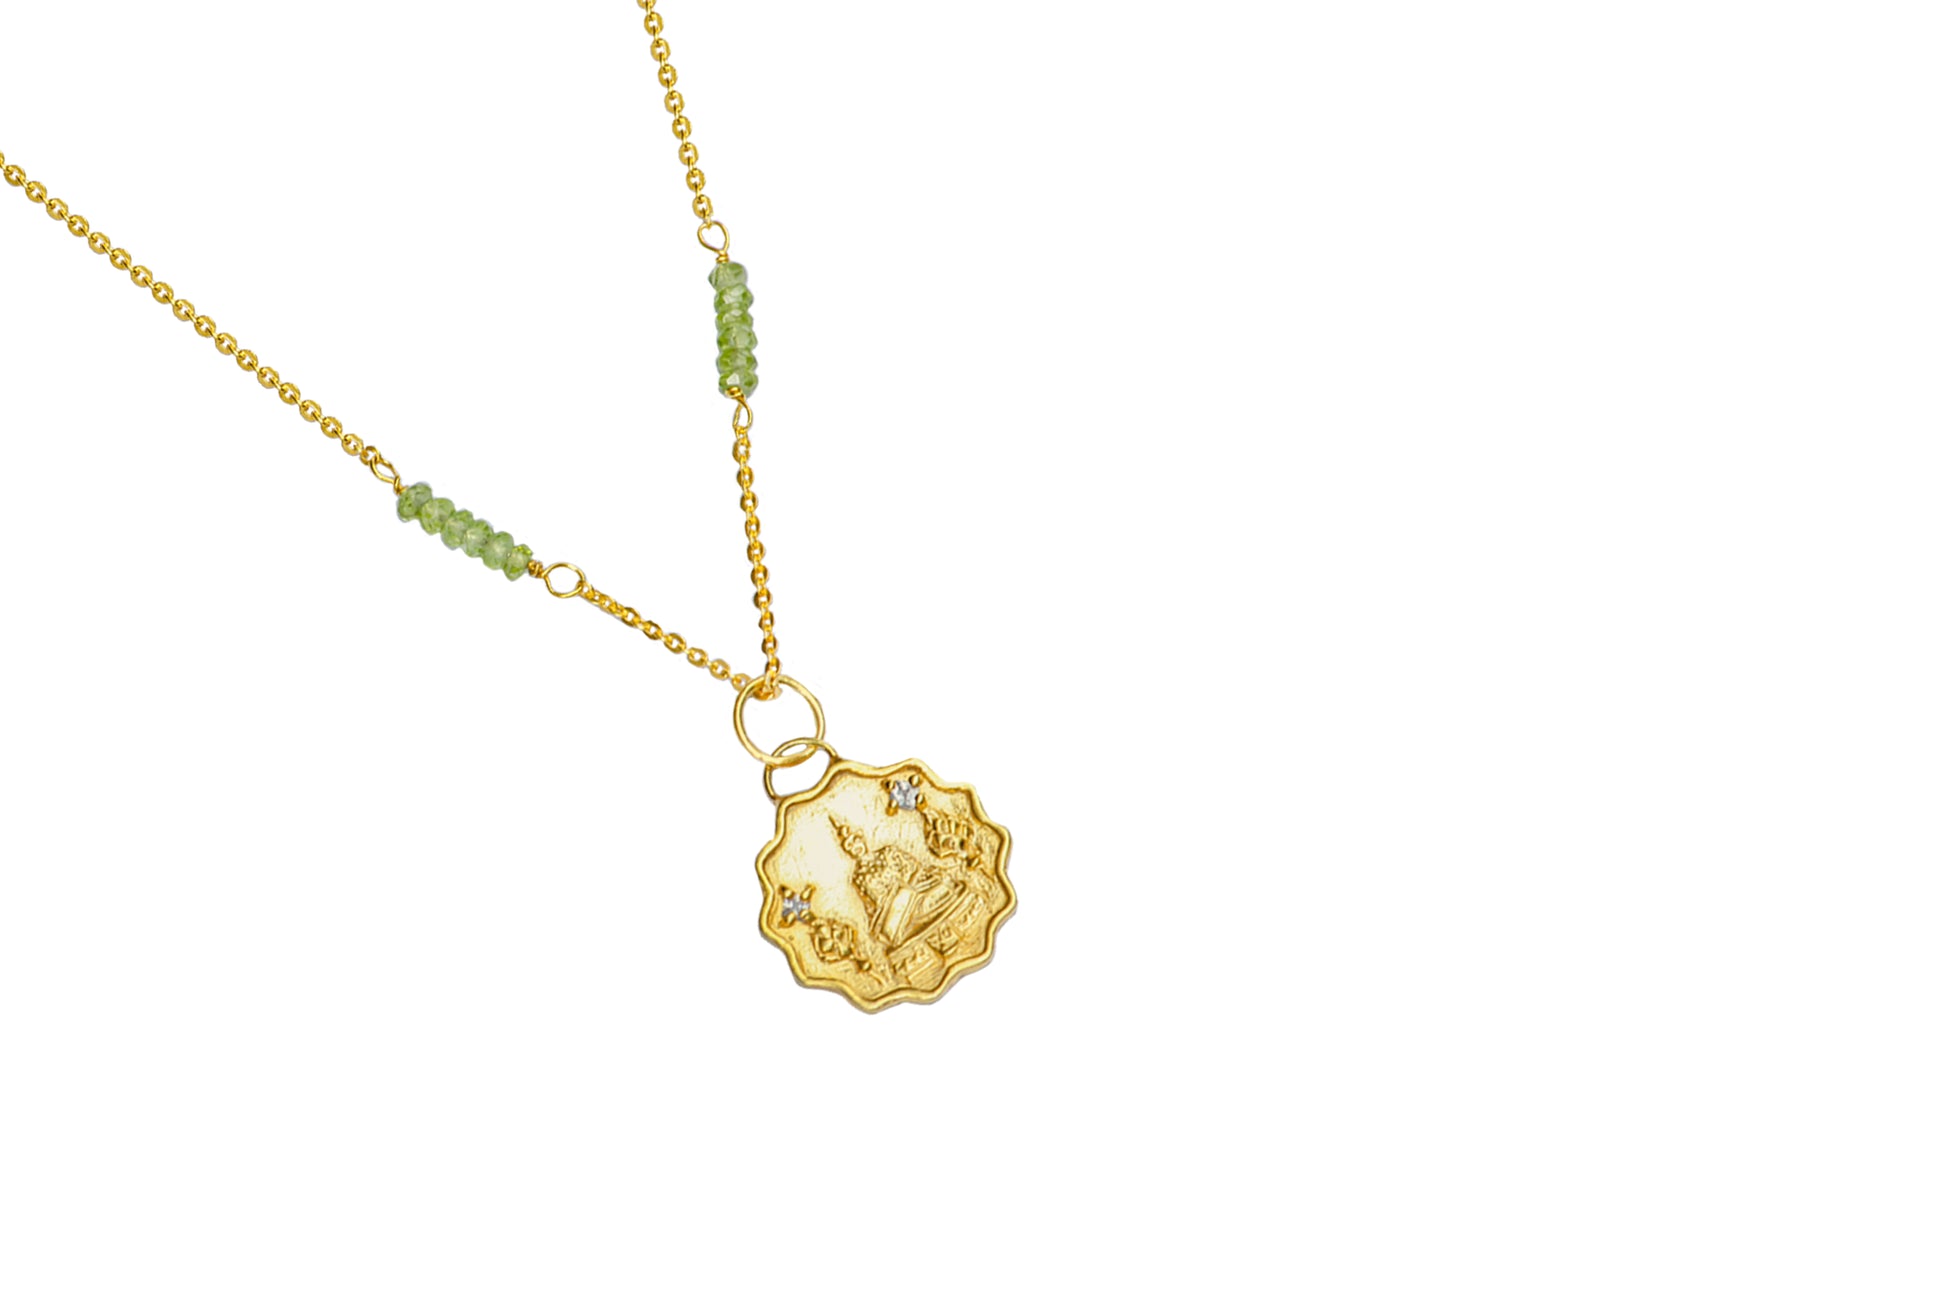 Buddha medallion necklace details